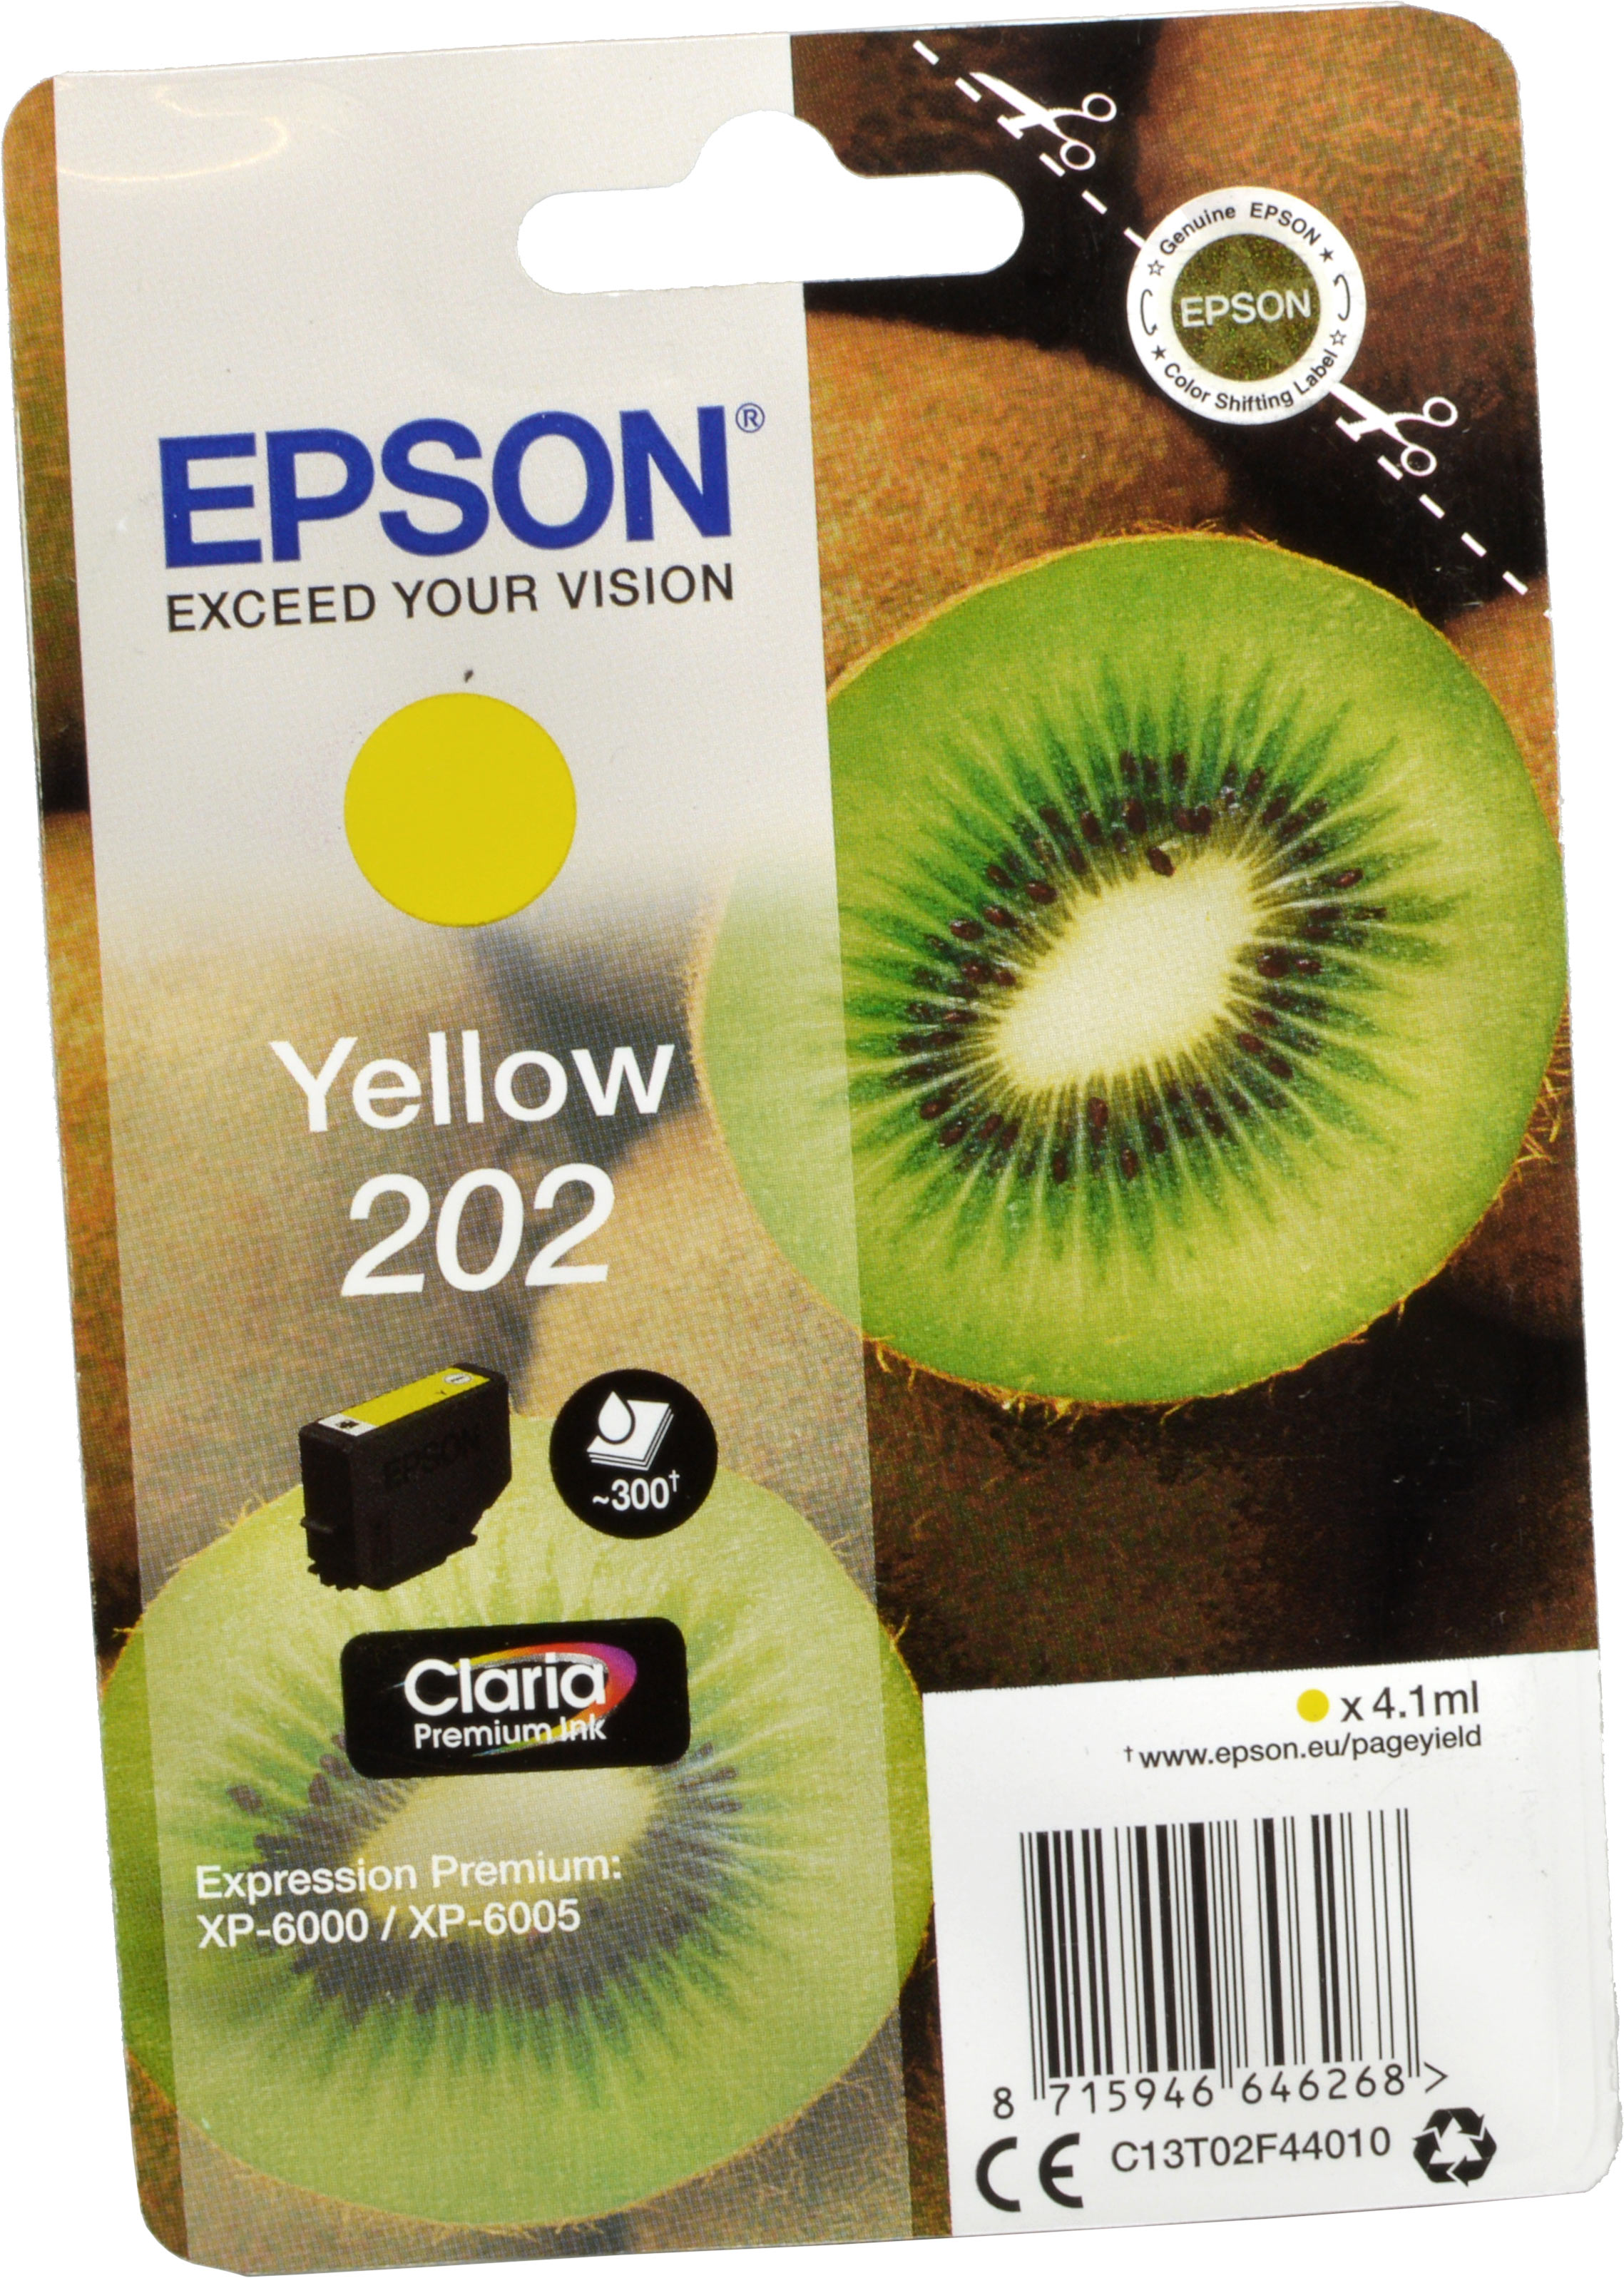 Epson Tinte C13T02F44010 Yellow 202  yellow